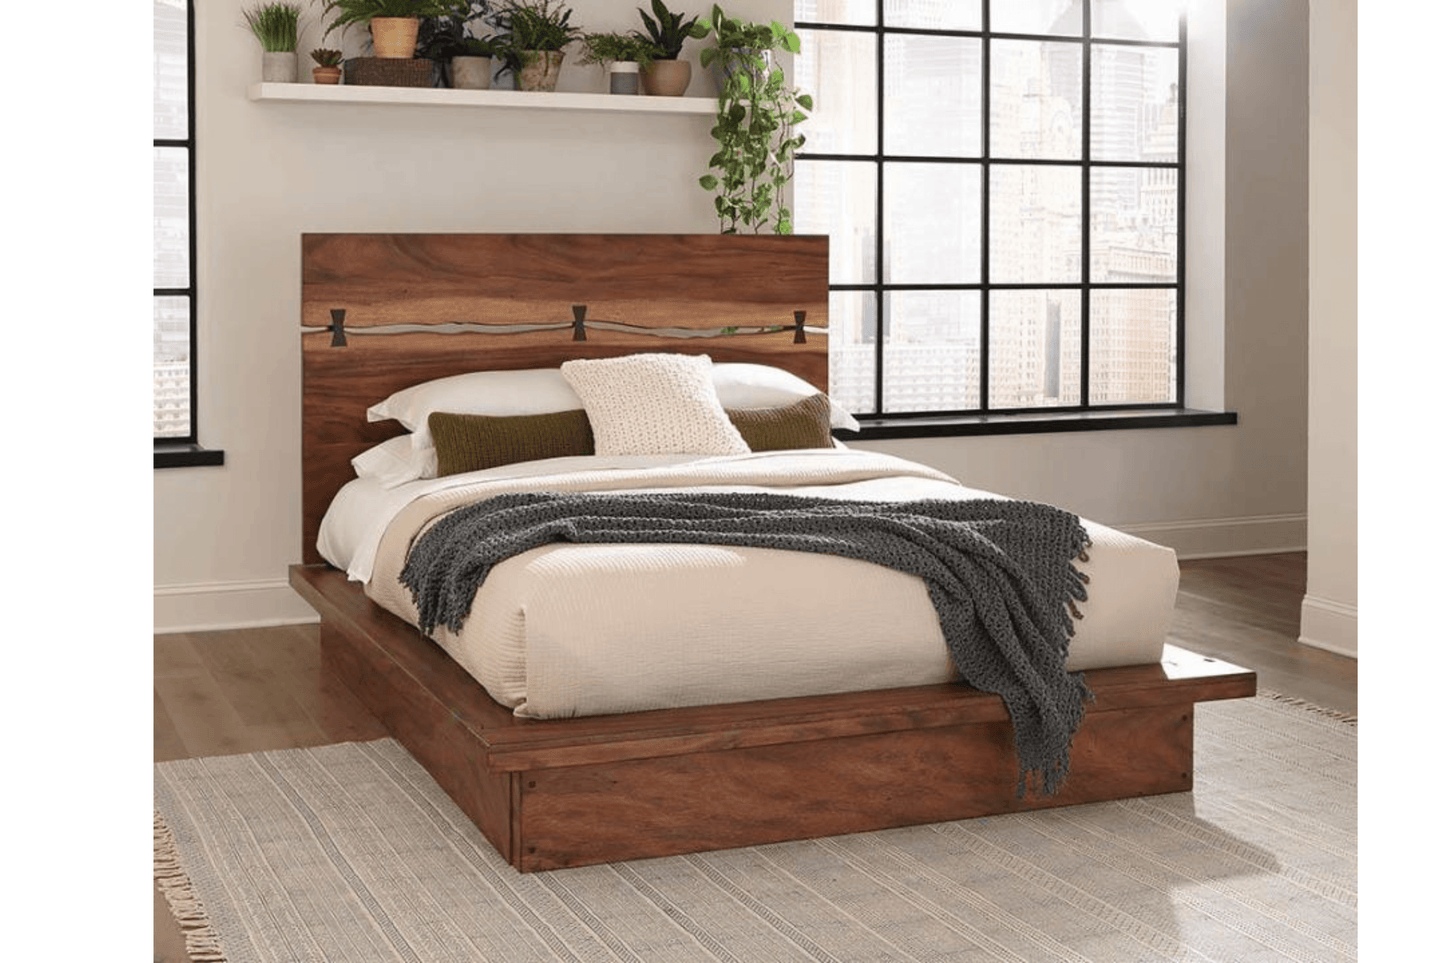 Eastern bed design with smokey walnut finish